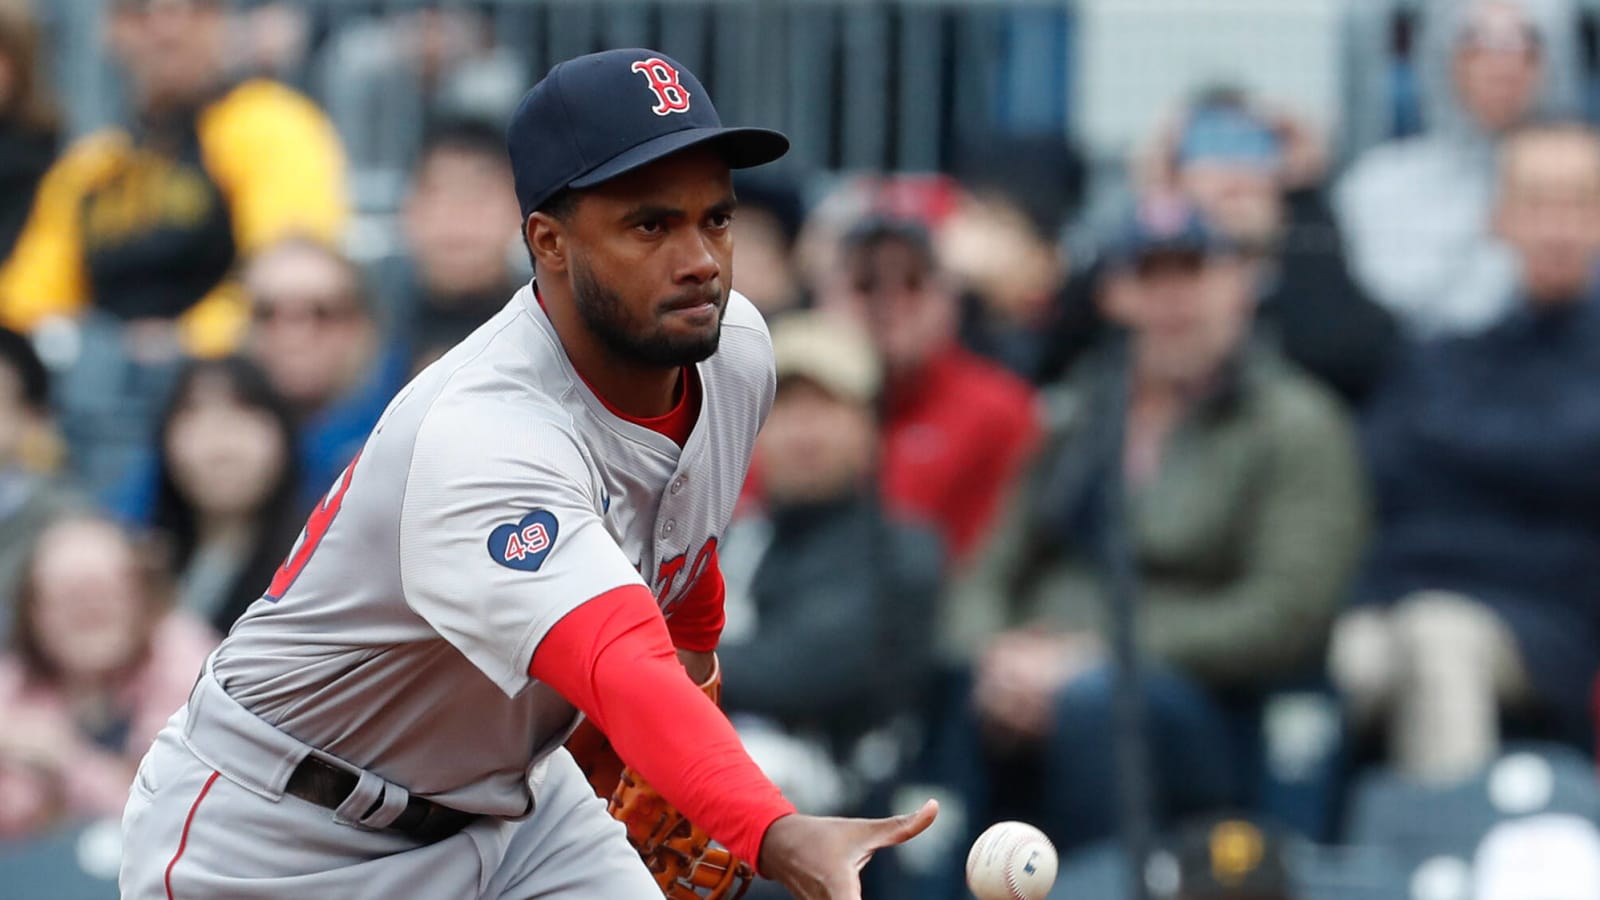 Red Sox designate third baseman for assignment